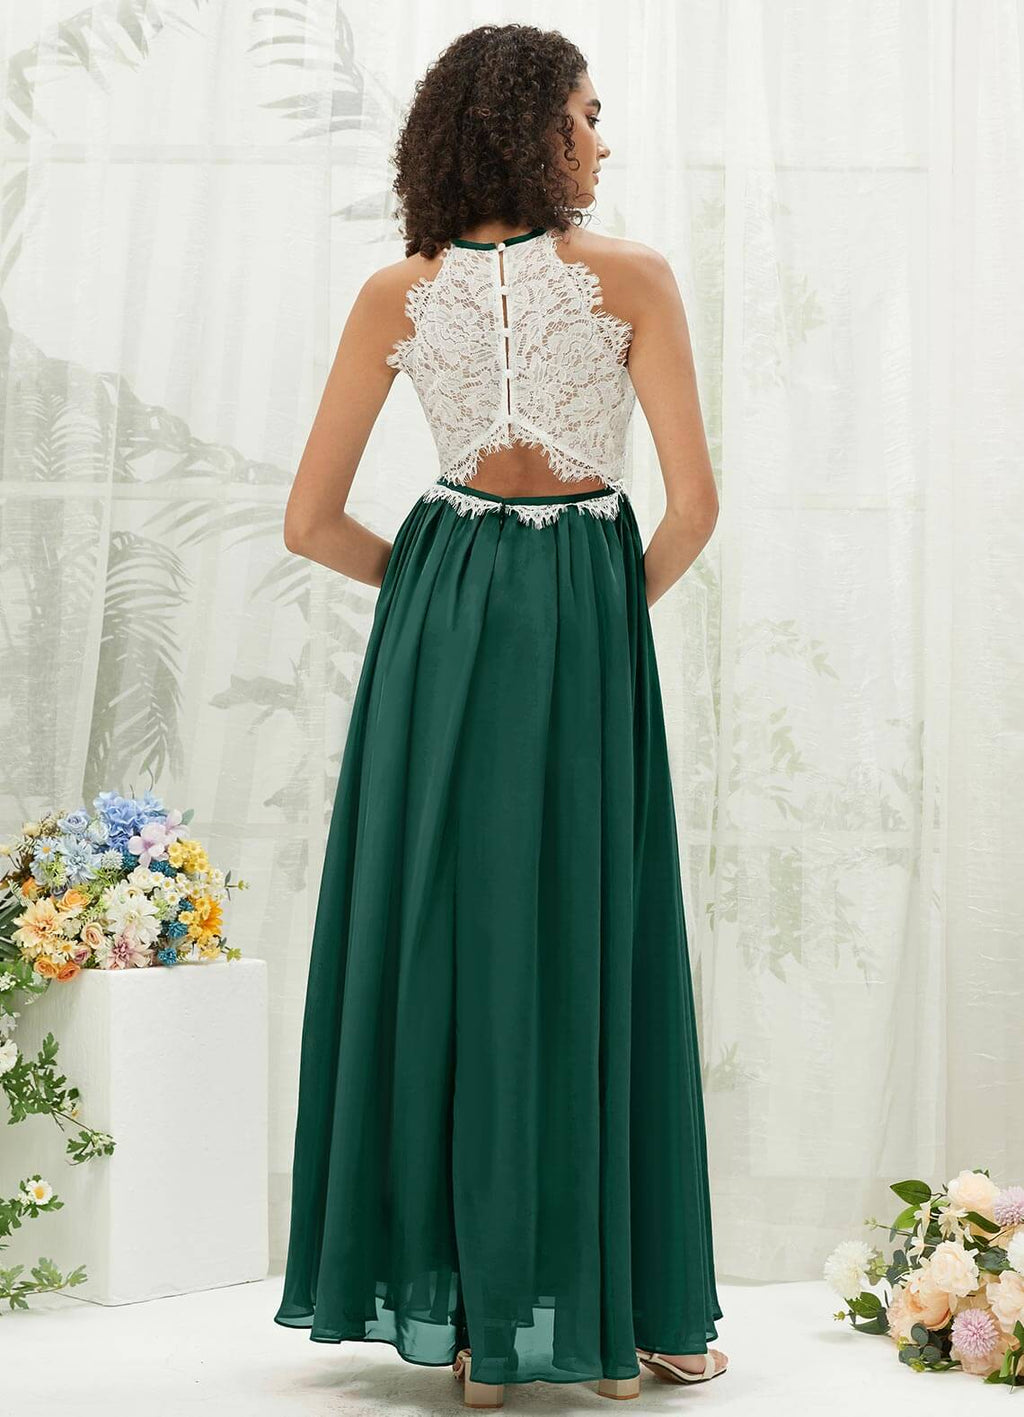 NZ Bridal Emerald Green Chiffon Halter Neck Backless bridesmaid dresses TC0426 Heidi a